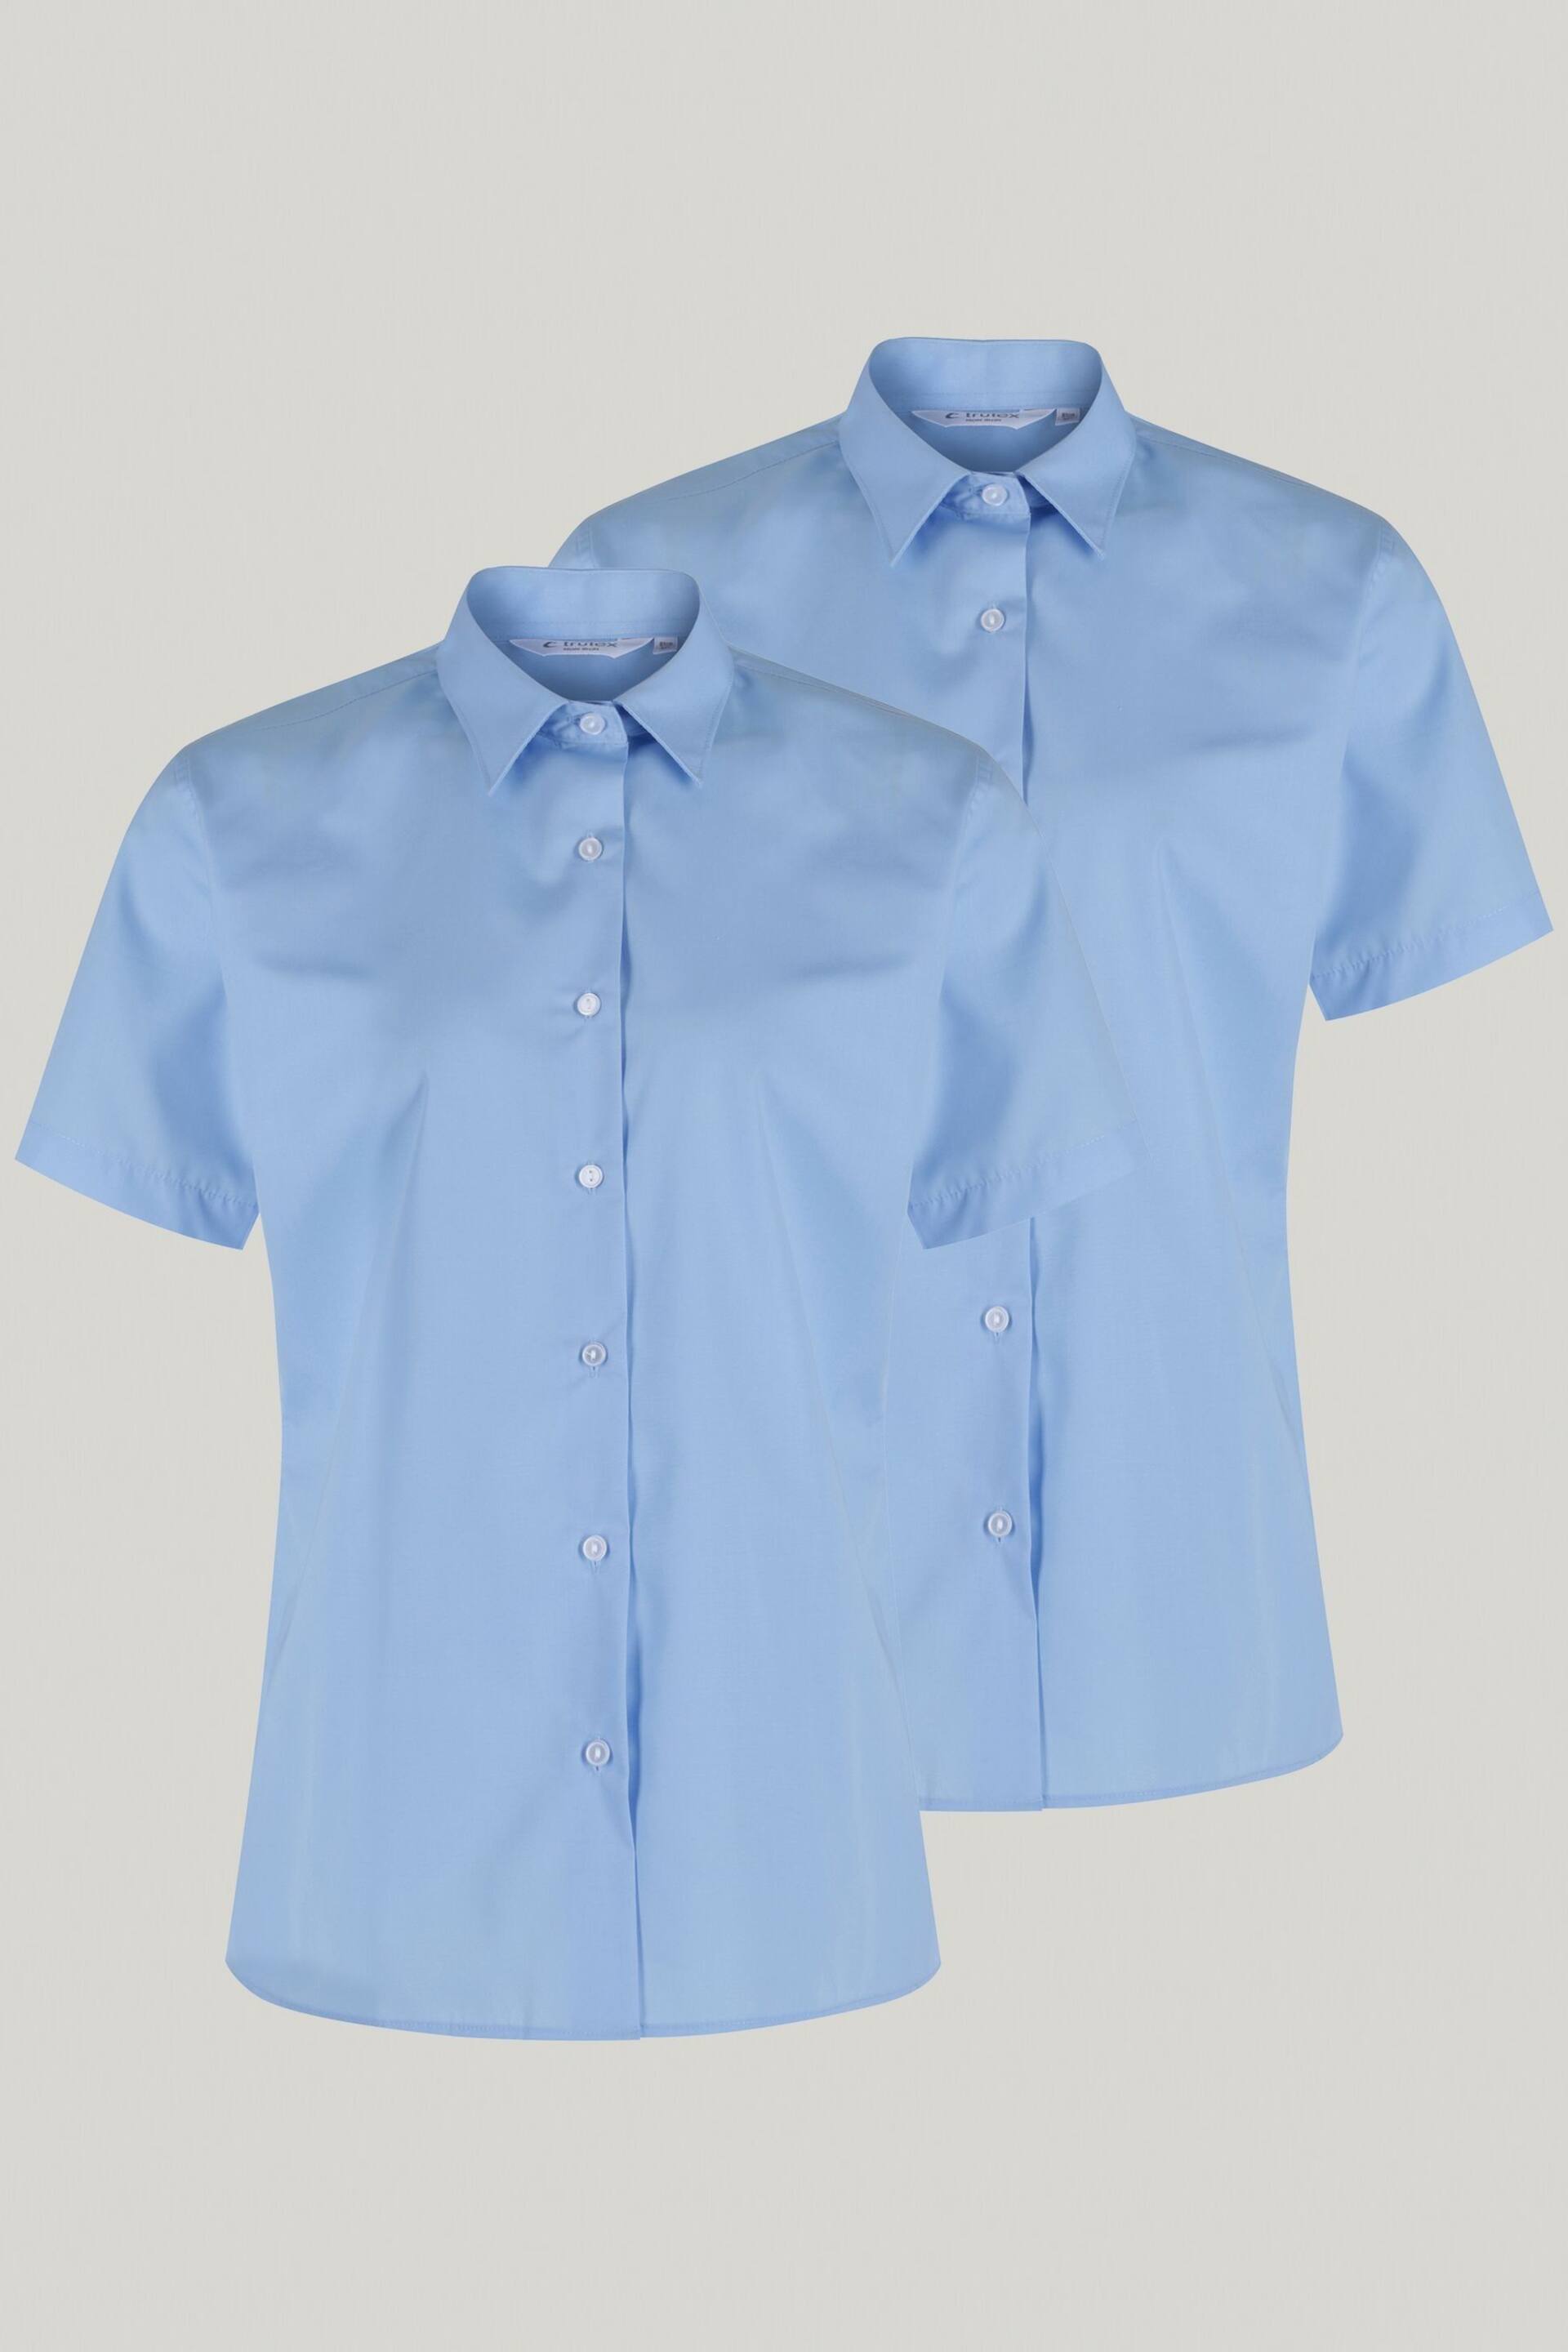 Trutex Blue Regular Fit Short Sleeve 2 Pack School Shirts - Image 2 of 6